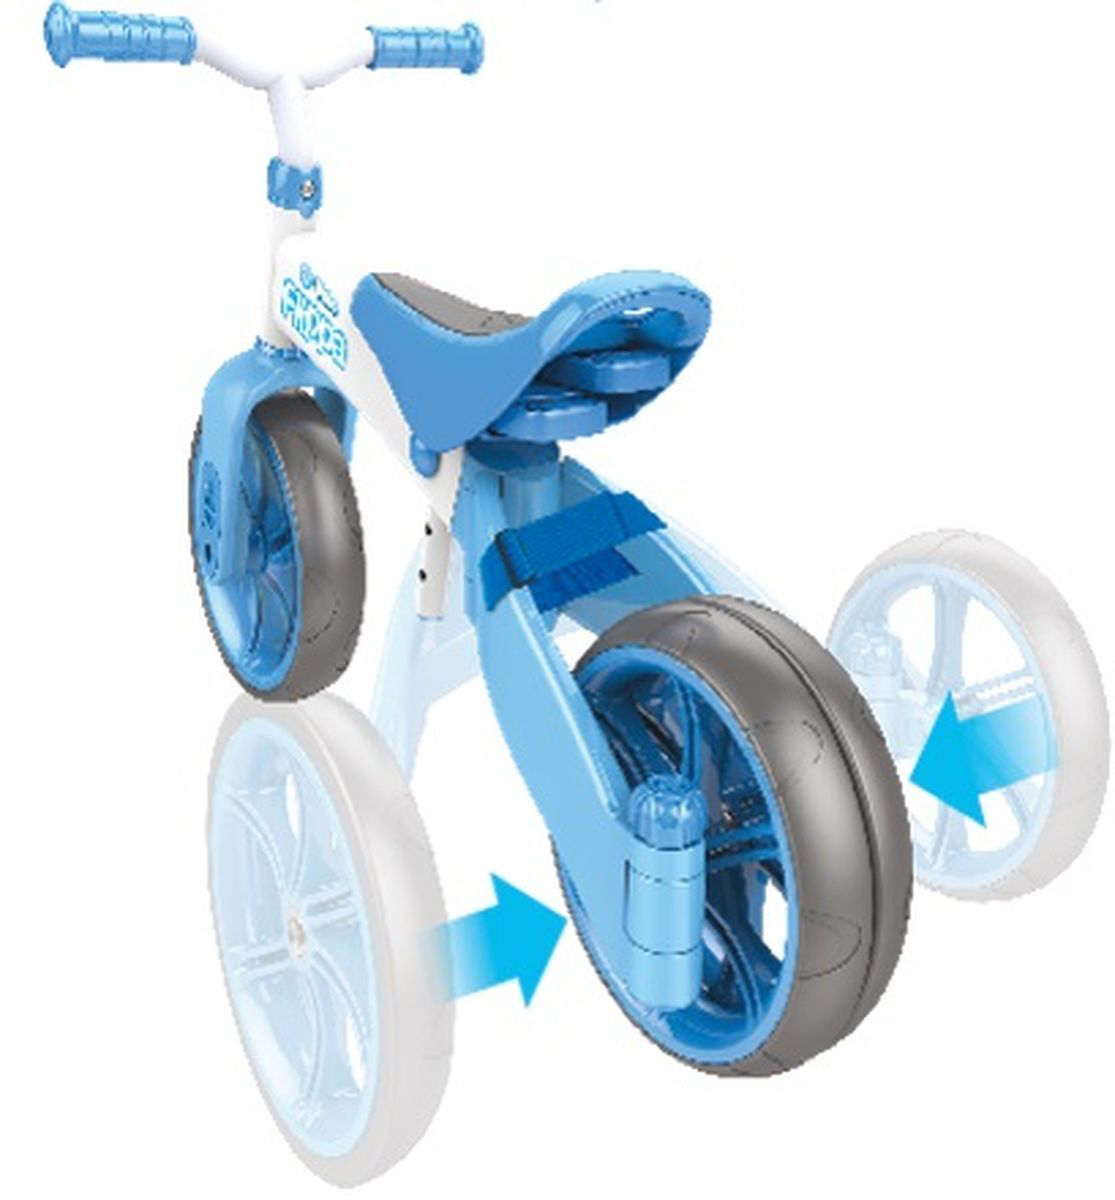 Беговел-велосипед YVolution Velo Flippa голубой  